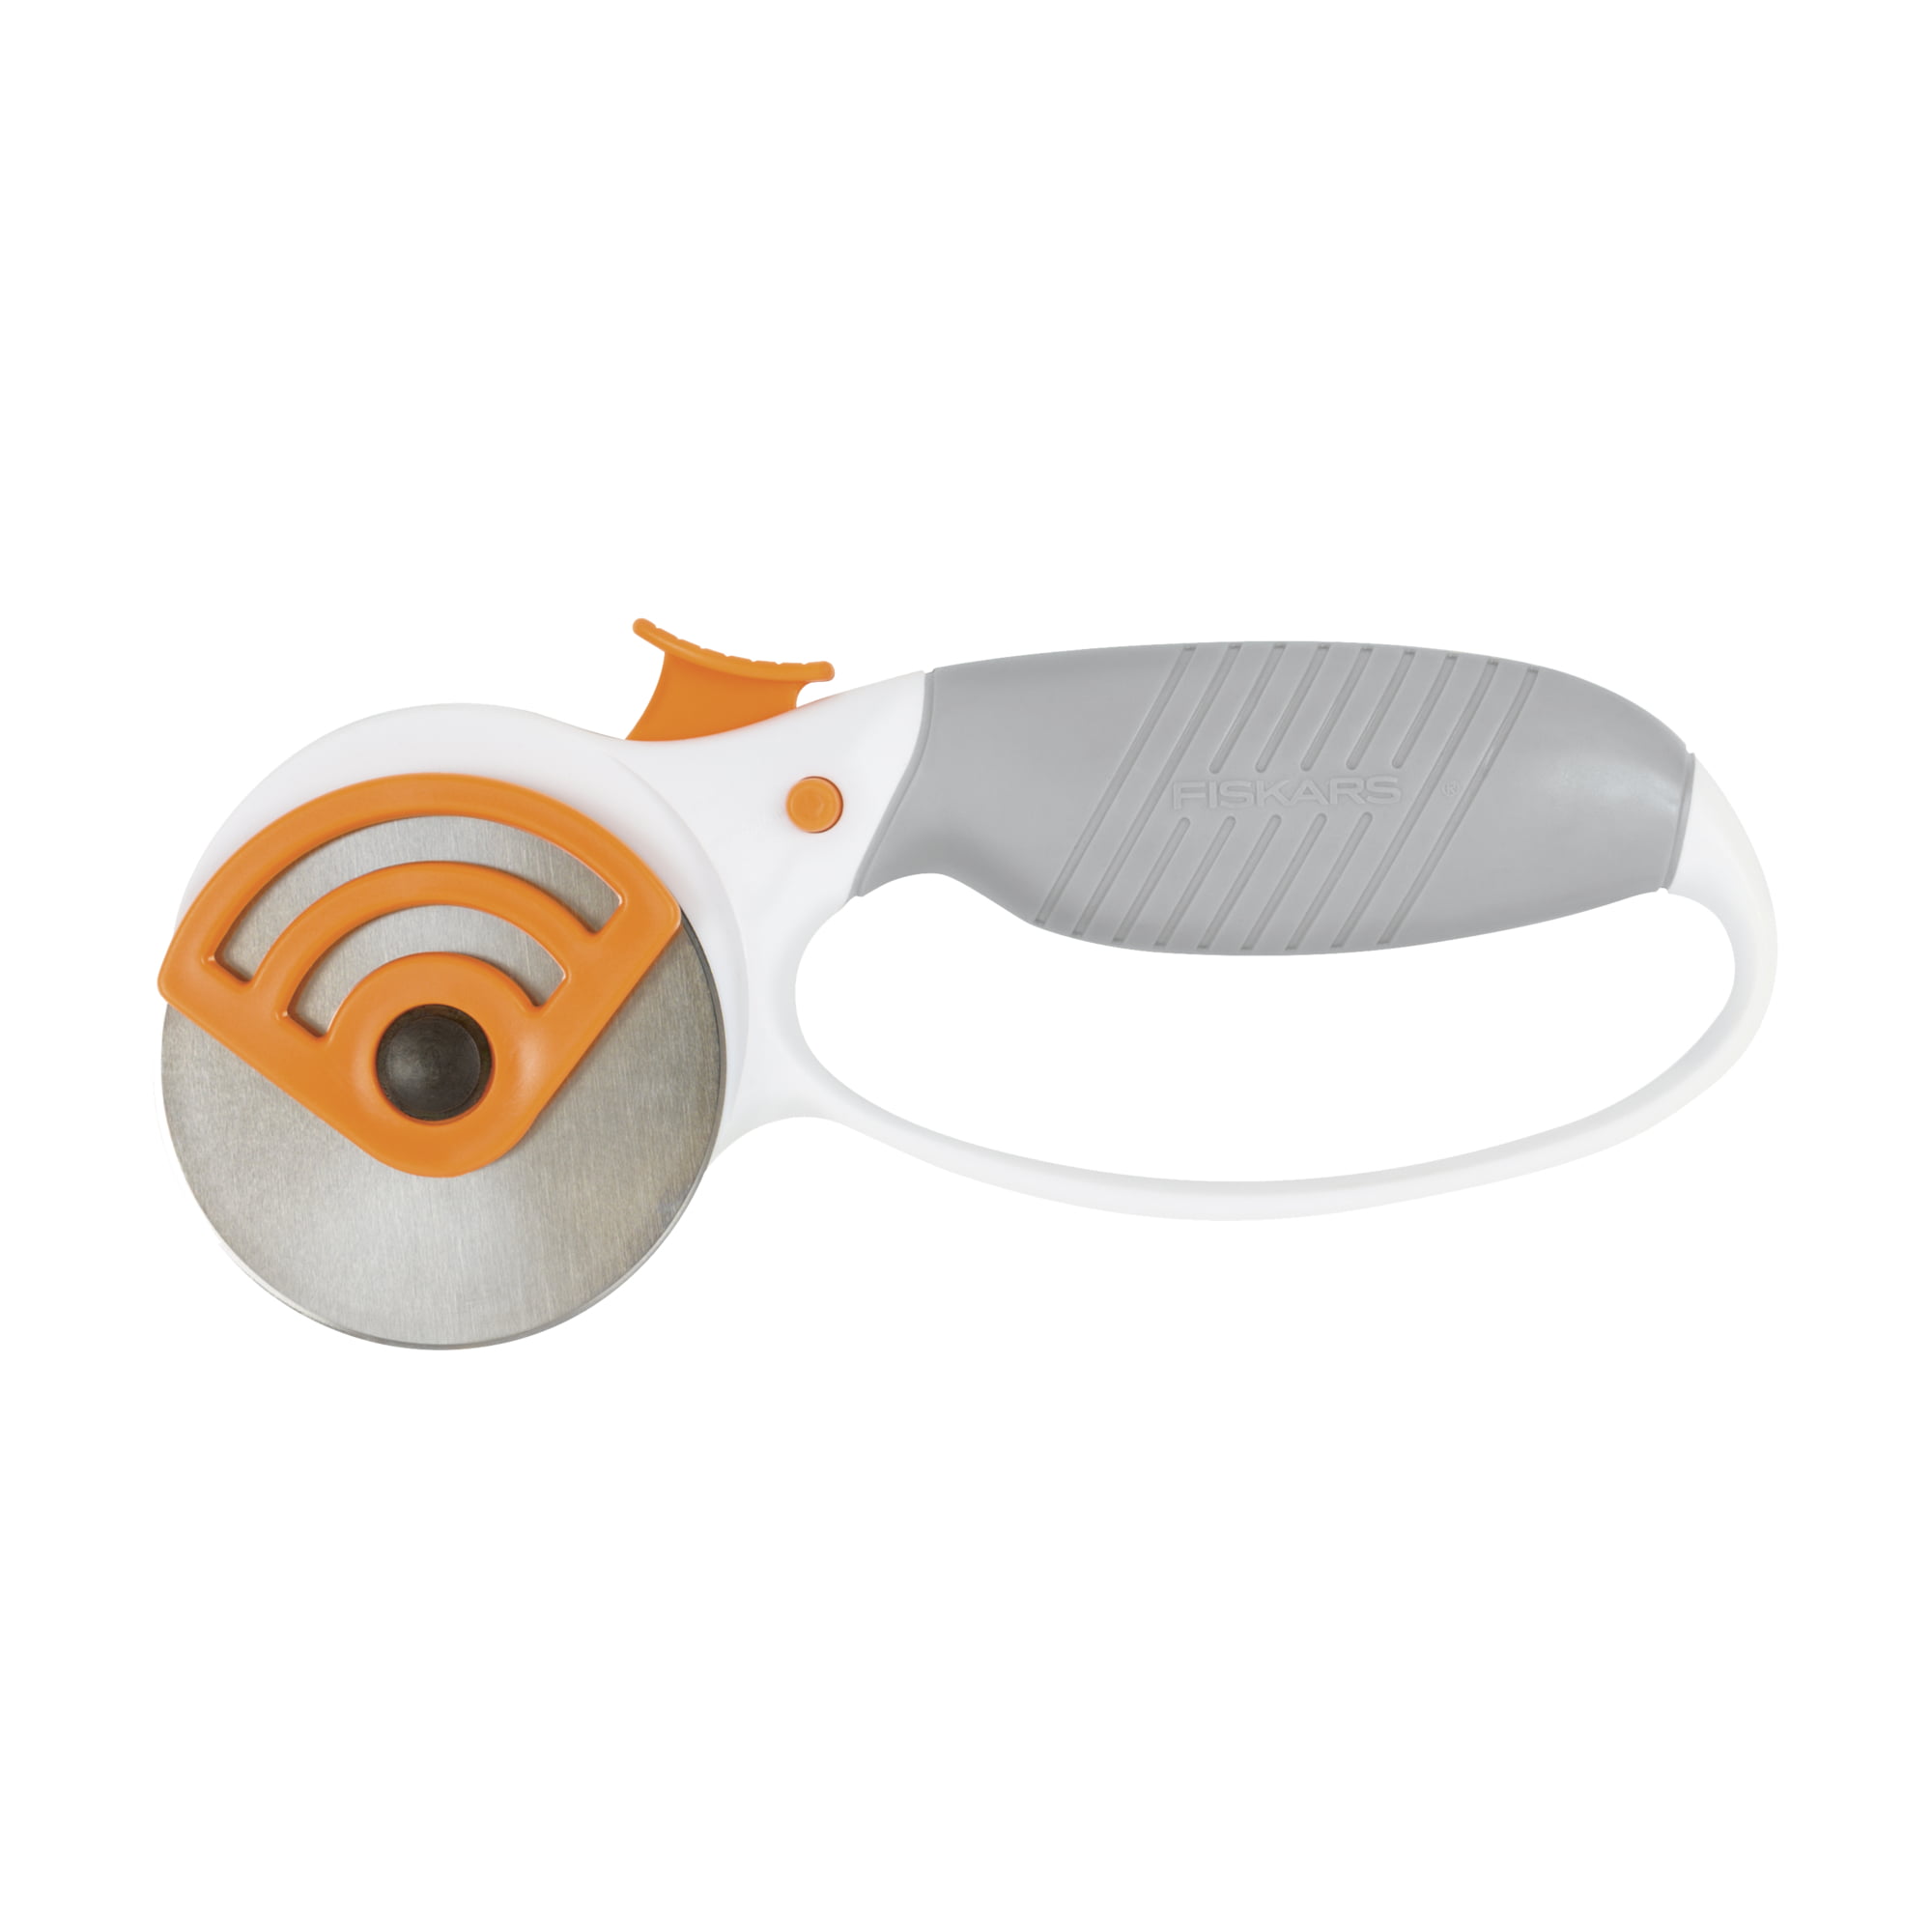 Fiskars® Fashion Comfort Loop Rotary Cutter (45 mm.) - 2020 Refresh - Berry